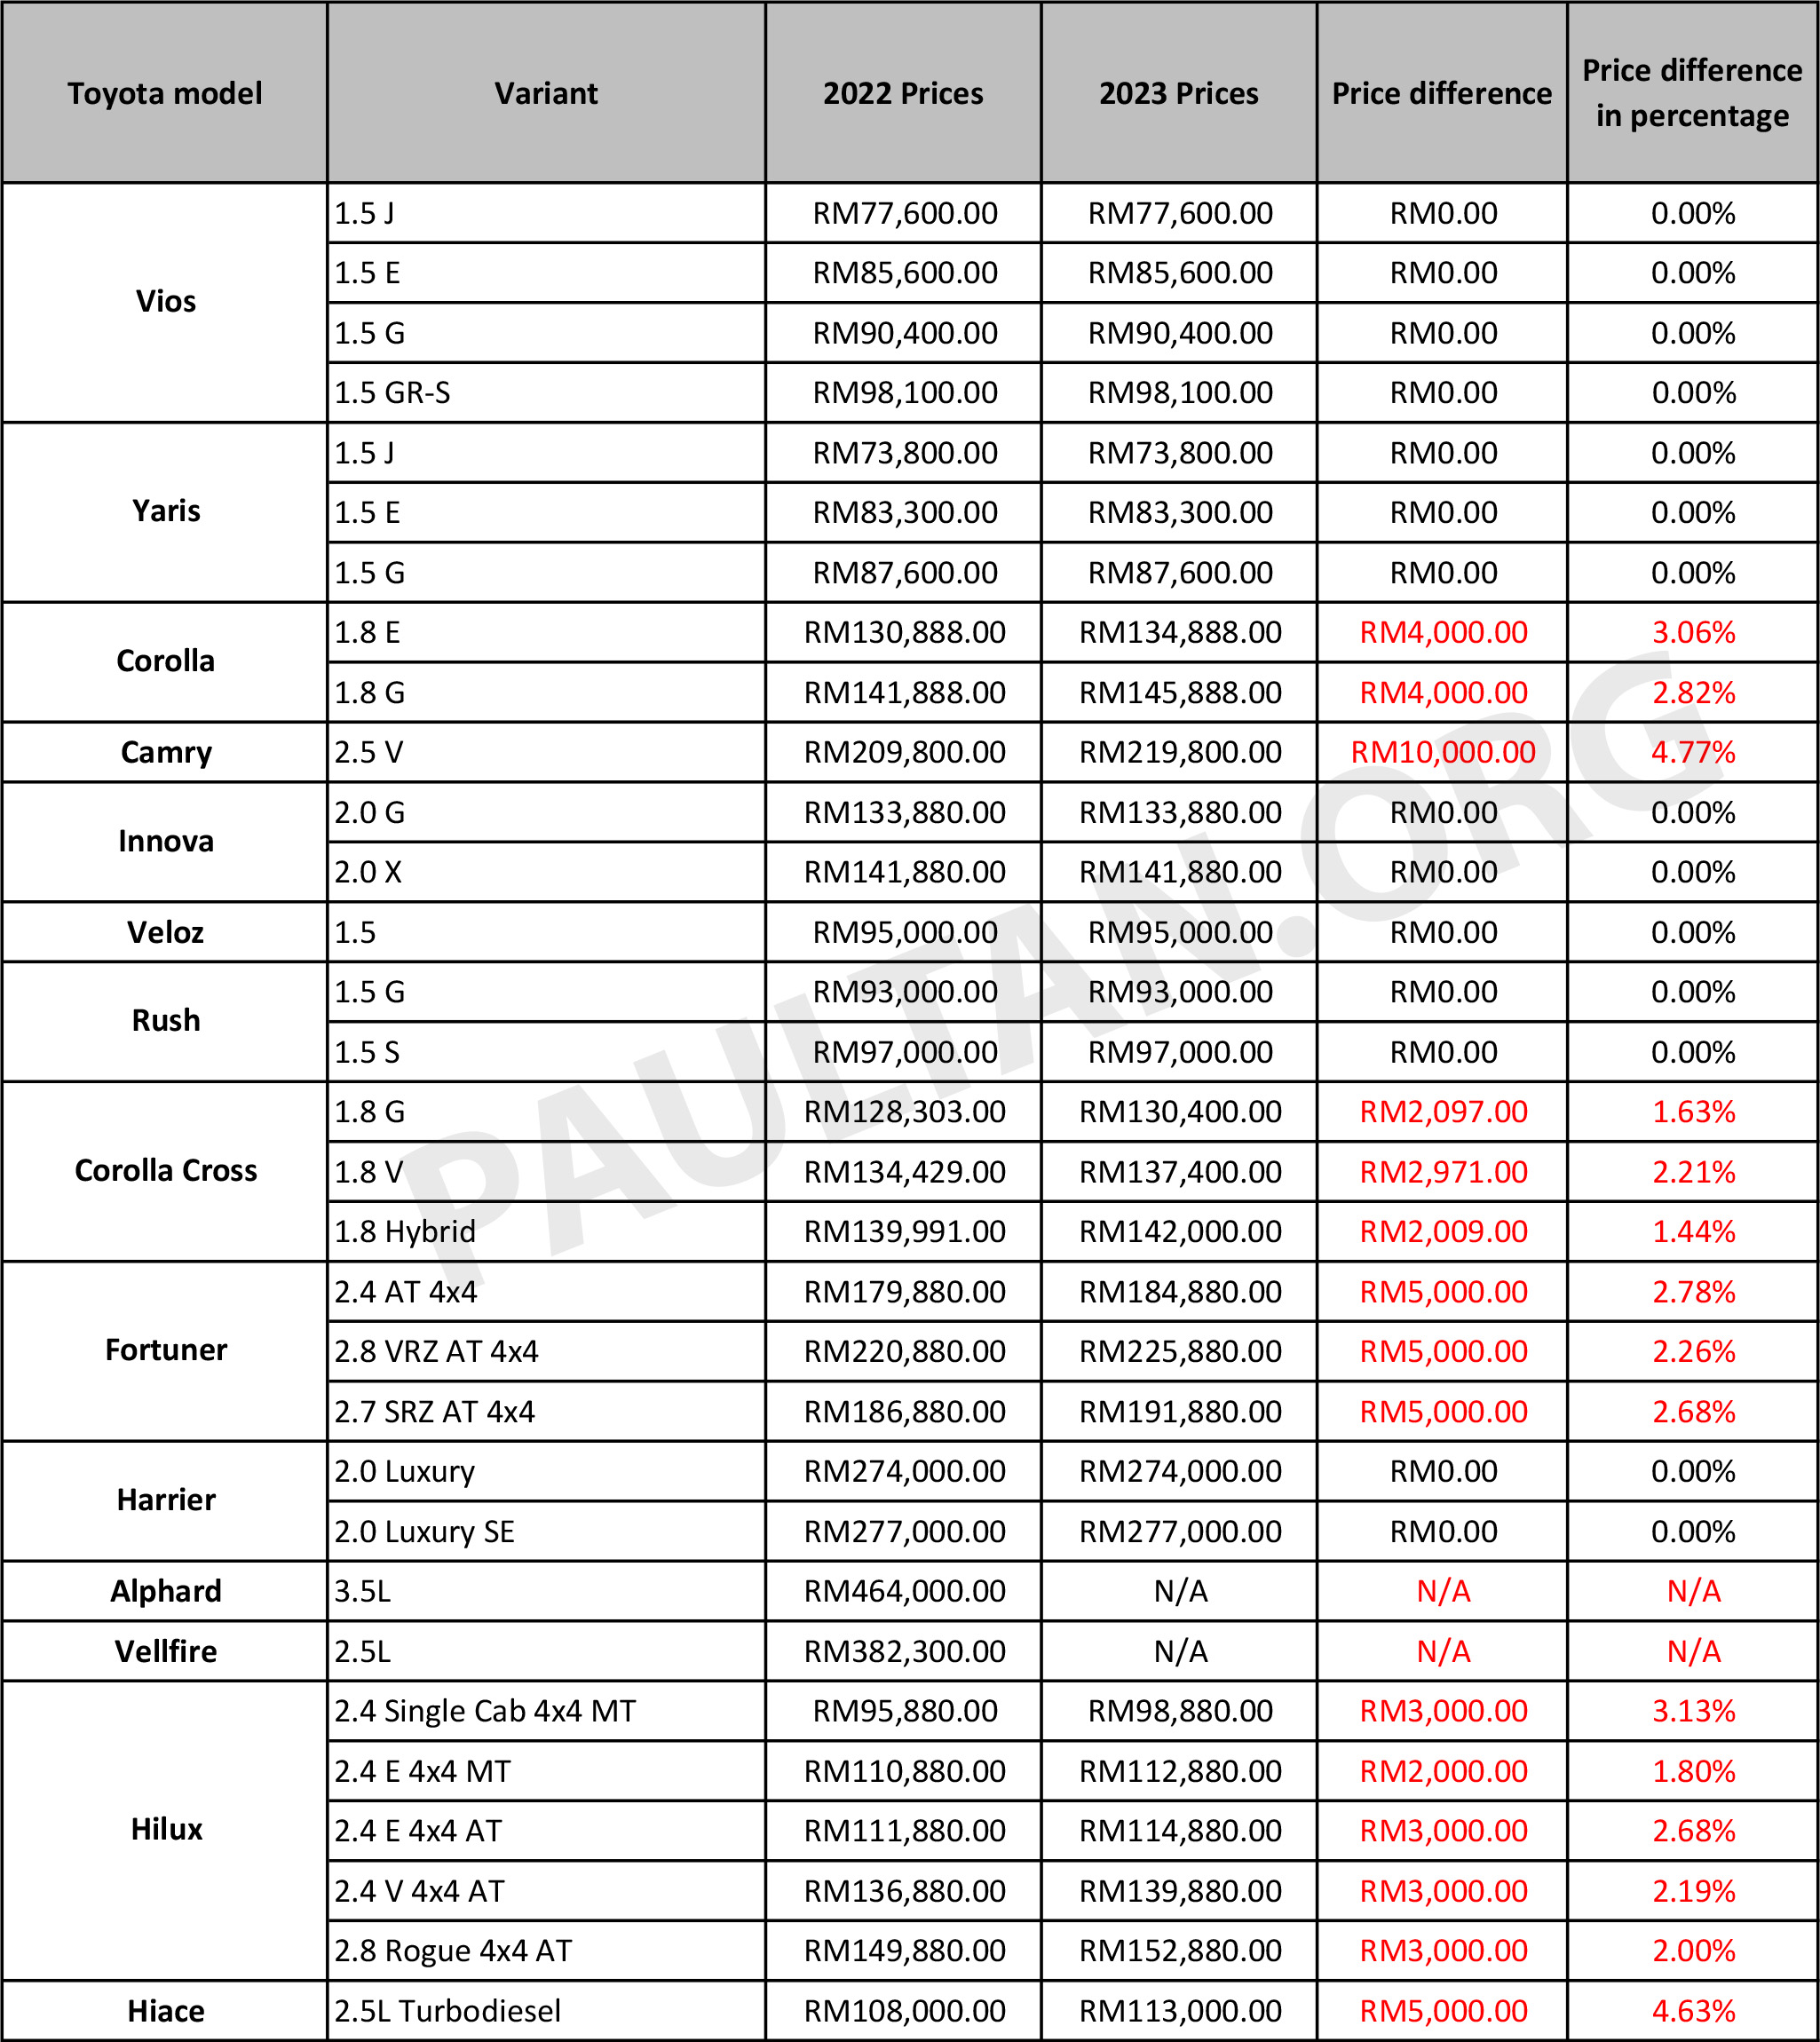 2023 Toyota Malaysia price list.xlsx Paul Tan's Automotive News